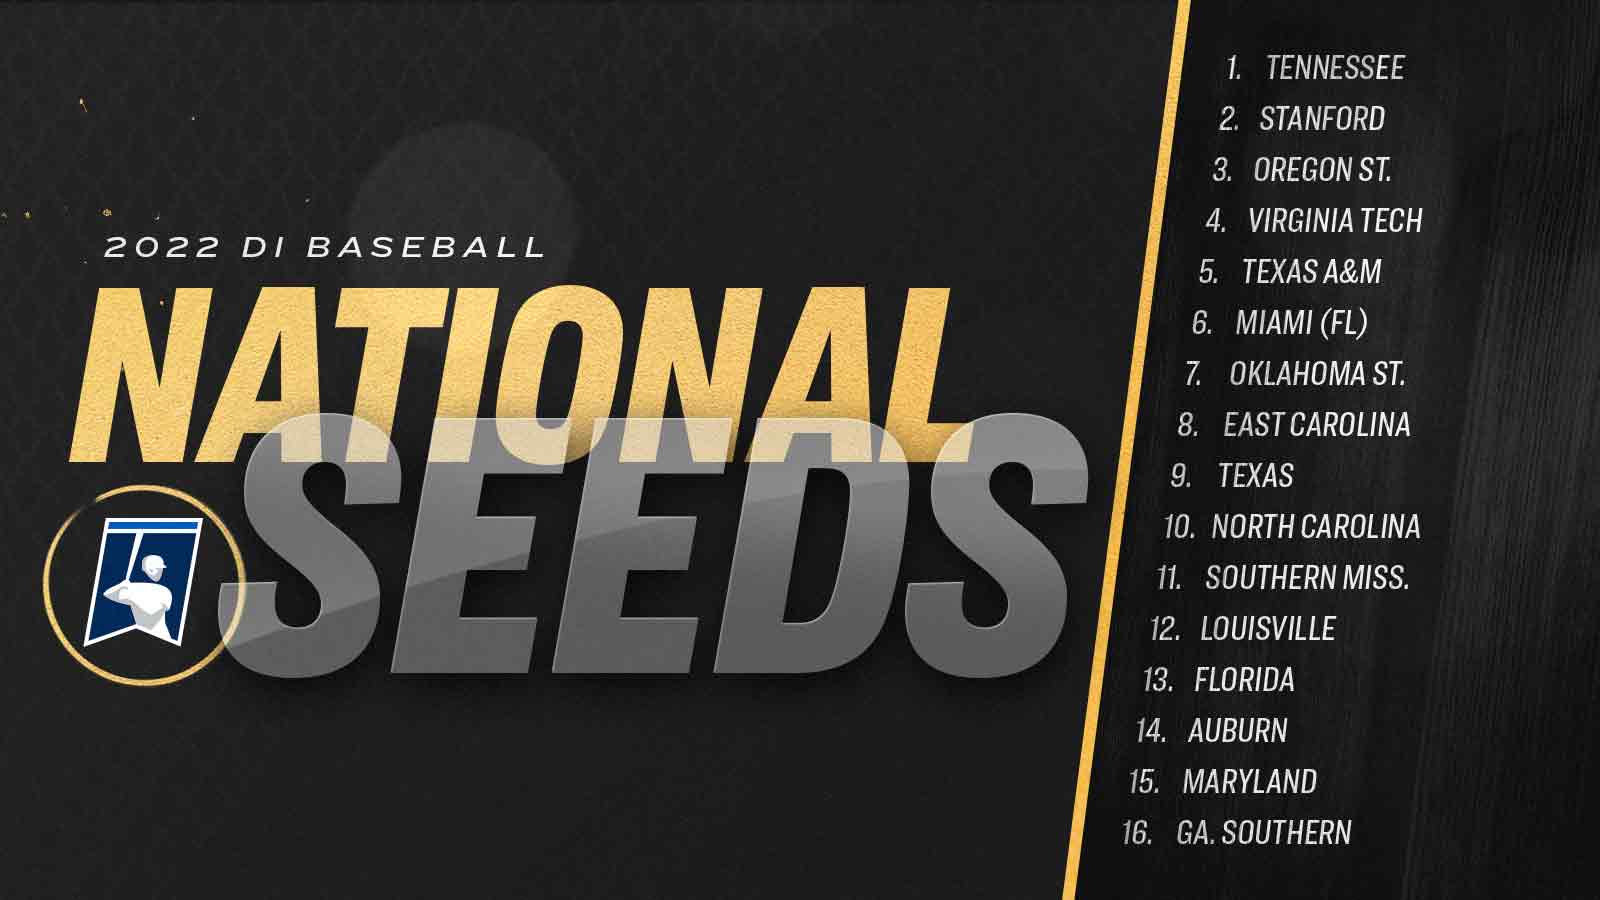 NCAA Baseball on Twitter "The 2022 National Seeds! 👀 RoadToOmaha